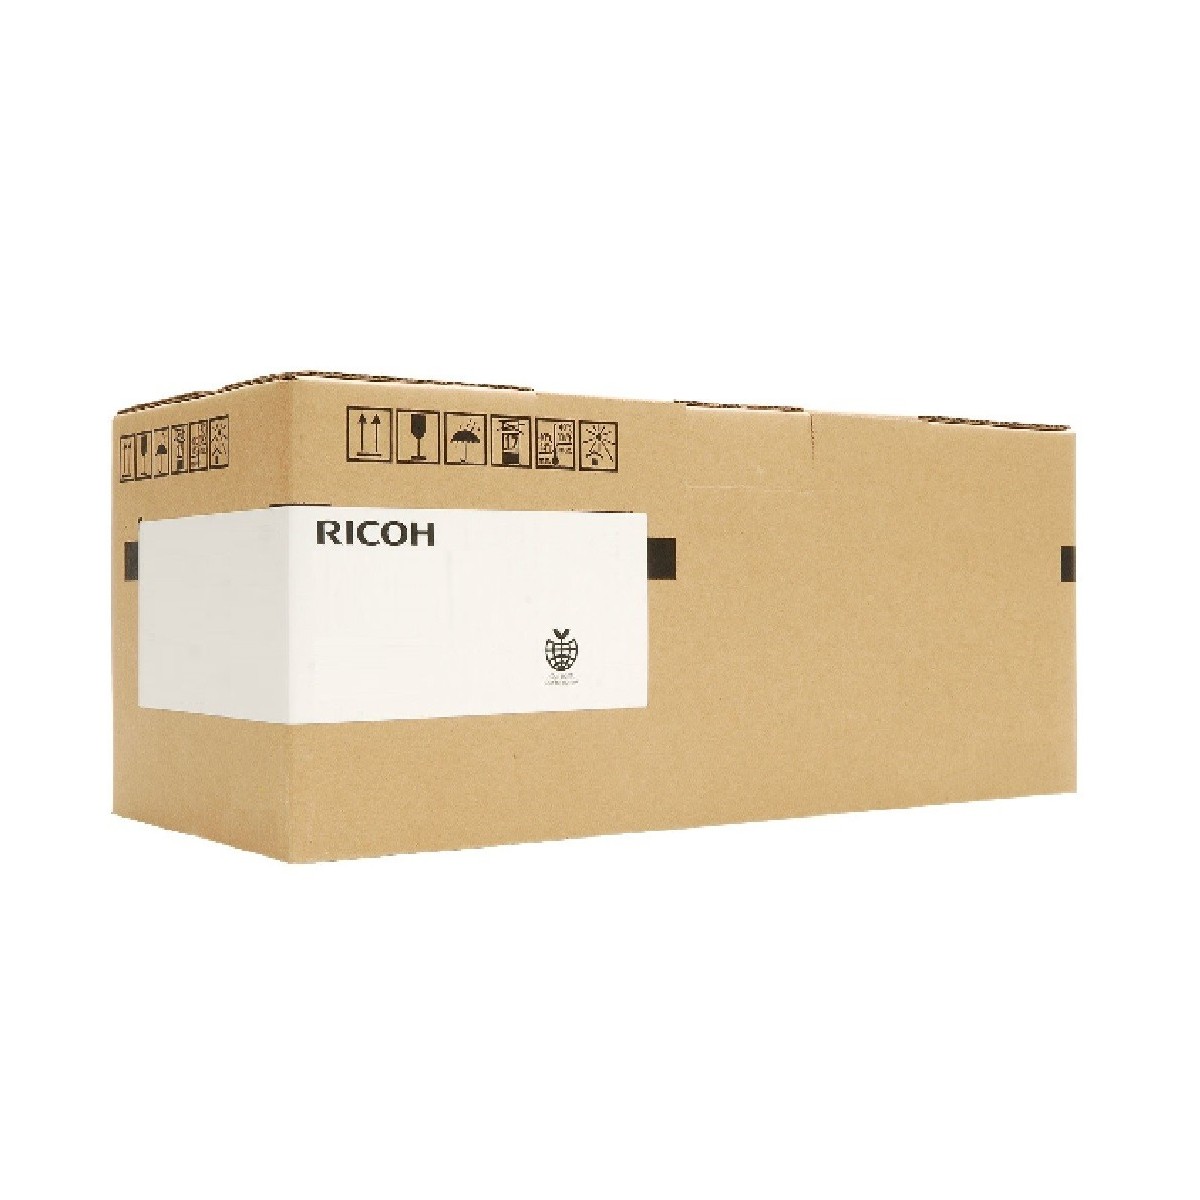 Ricoh B205K120 - Maintenance kit - 120000 pages - Ricoh - Aficio 1027 Aficio 1032 Aficio 2022 Aficio 2022SP - 1 pc(s)